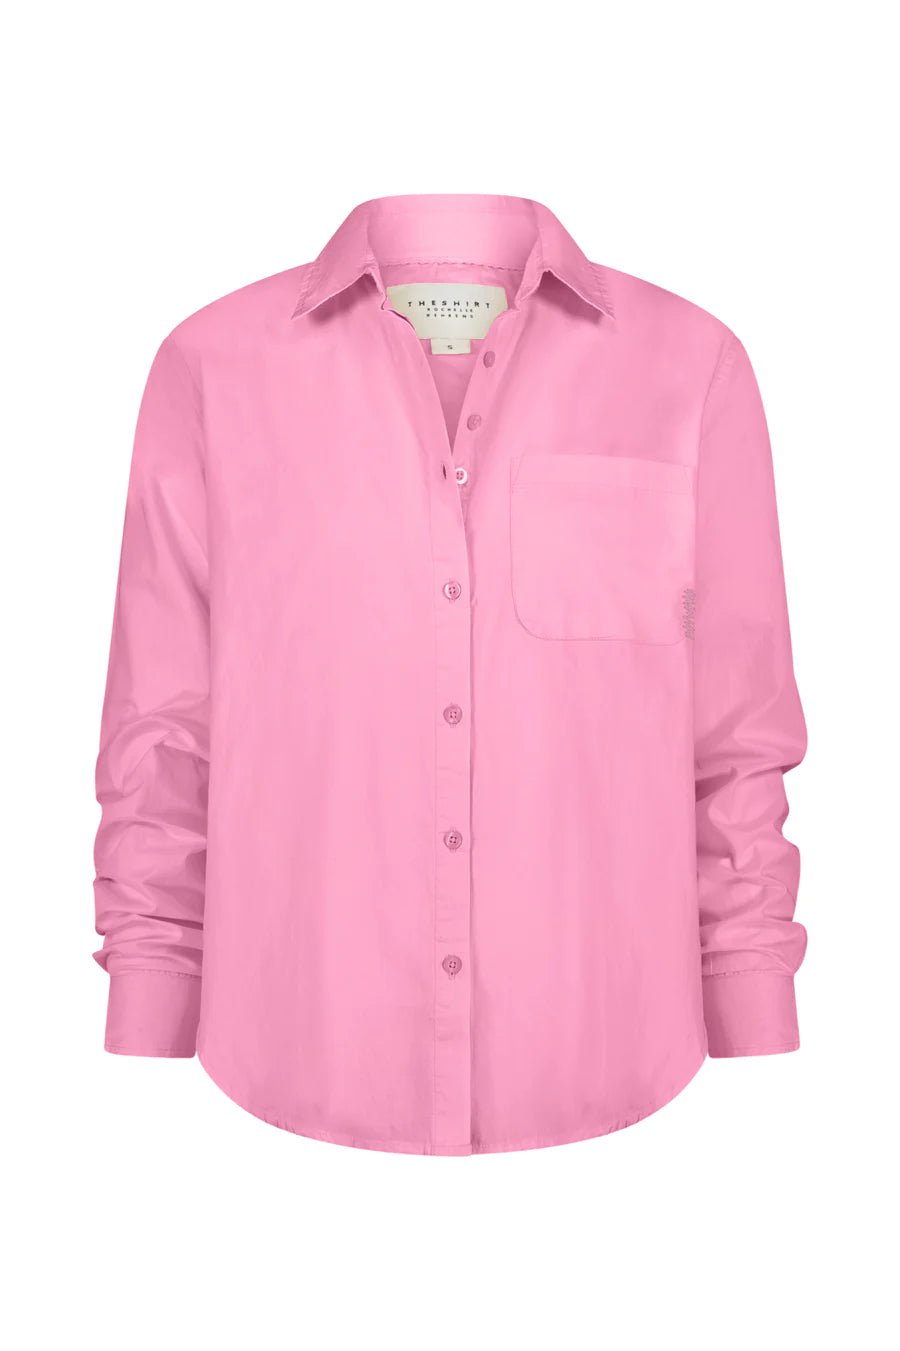 The Shirt The Tatum Shirt - Shocking Pink - Capri by Sunset & Co.